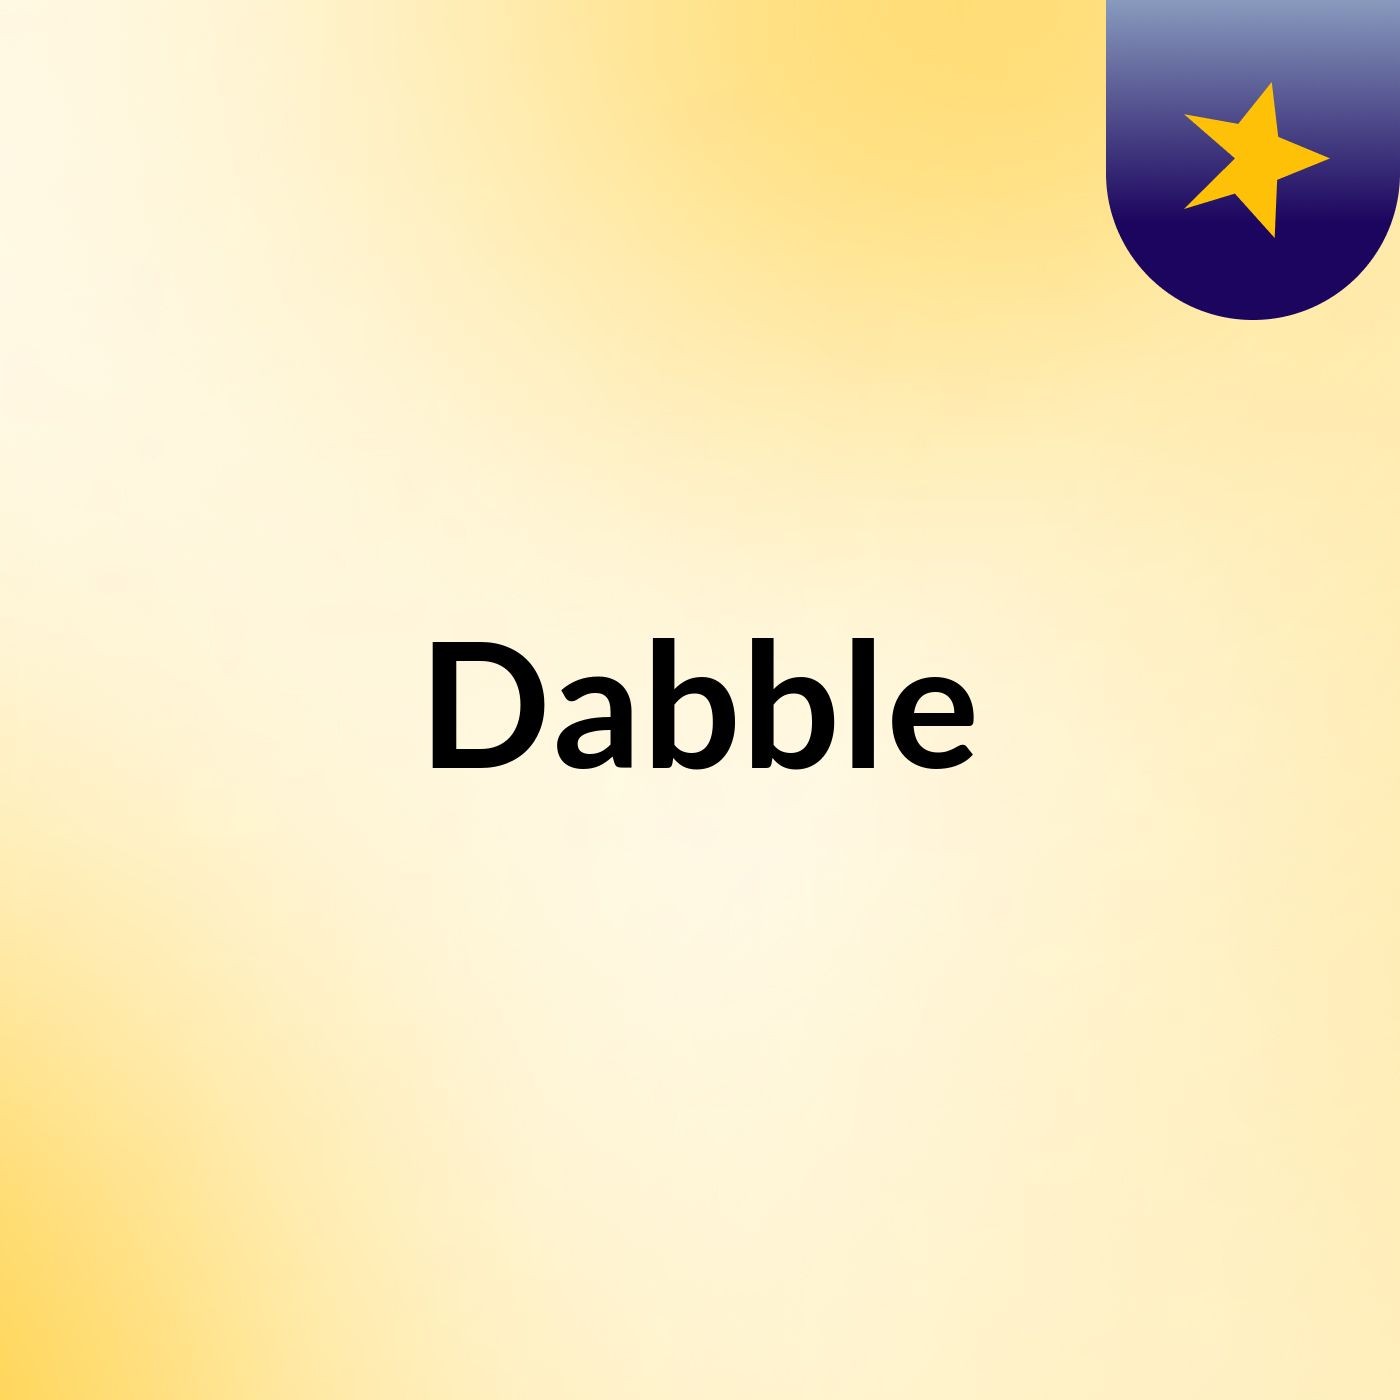 Dabble